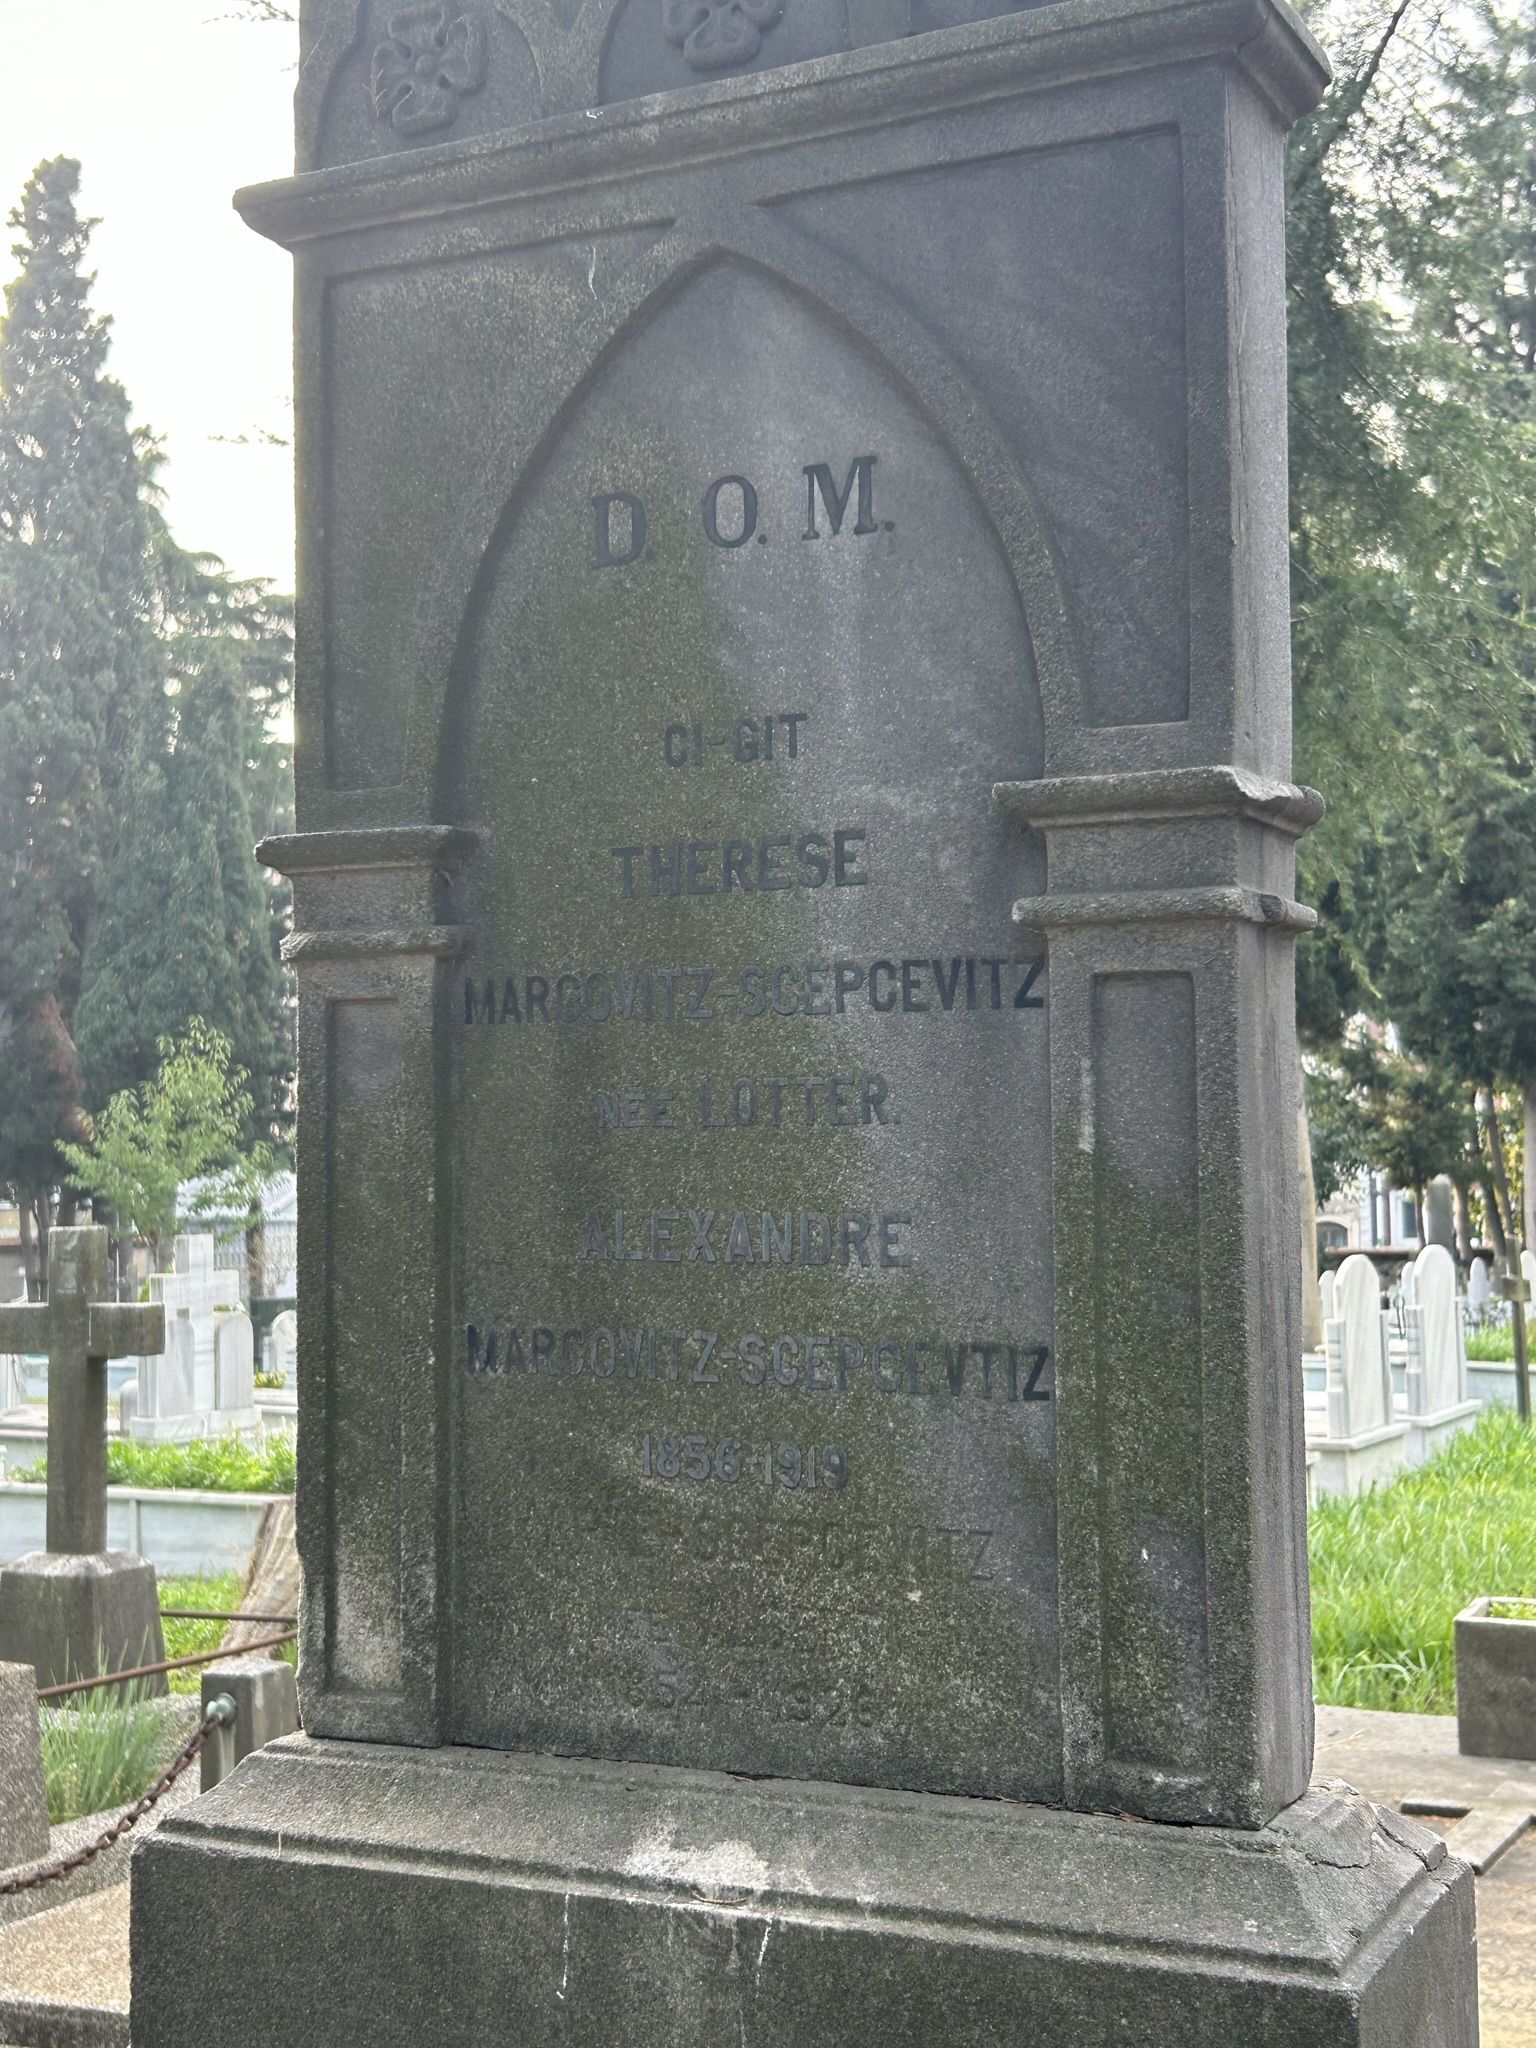 Inscription from the gravestone of Theresa Marcovitz-Scepcevitz and Marie Scepcevitz, Feriköy Catholic Cemetery